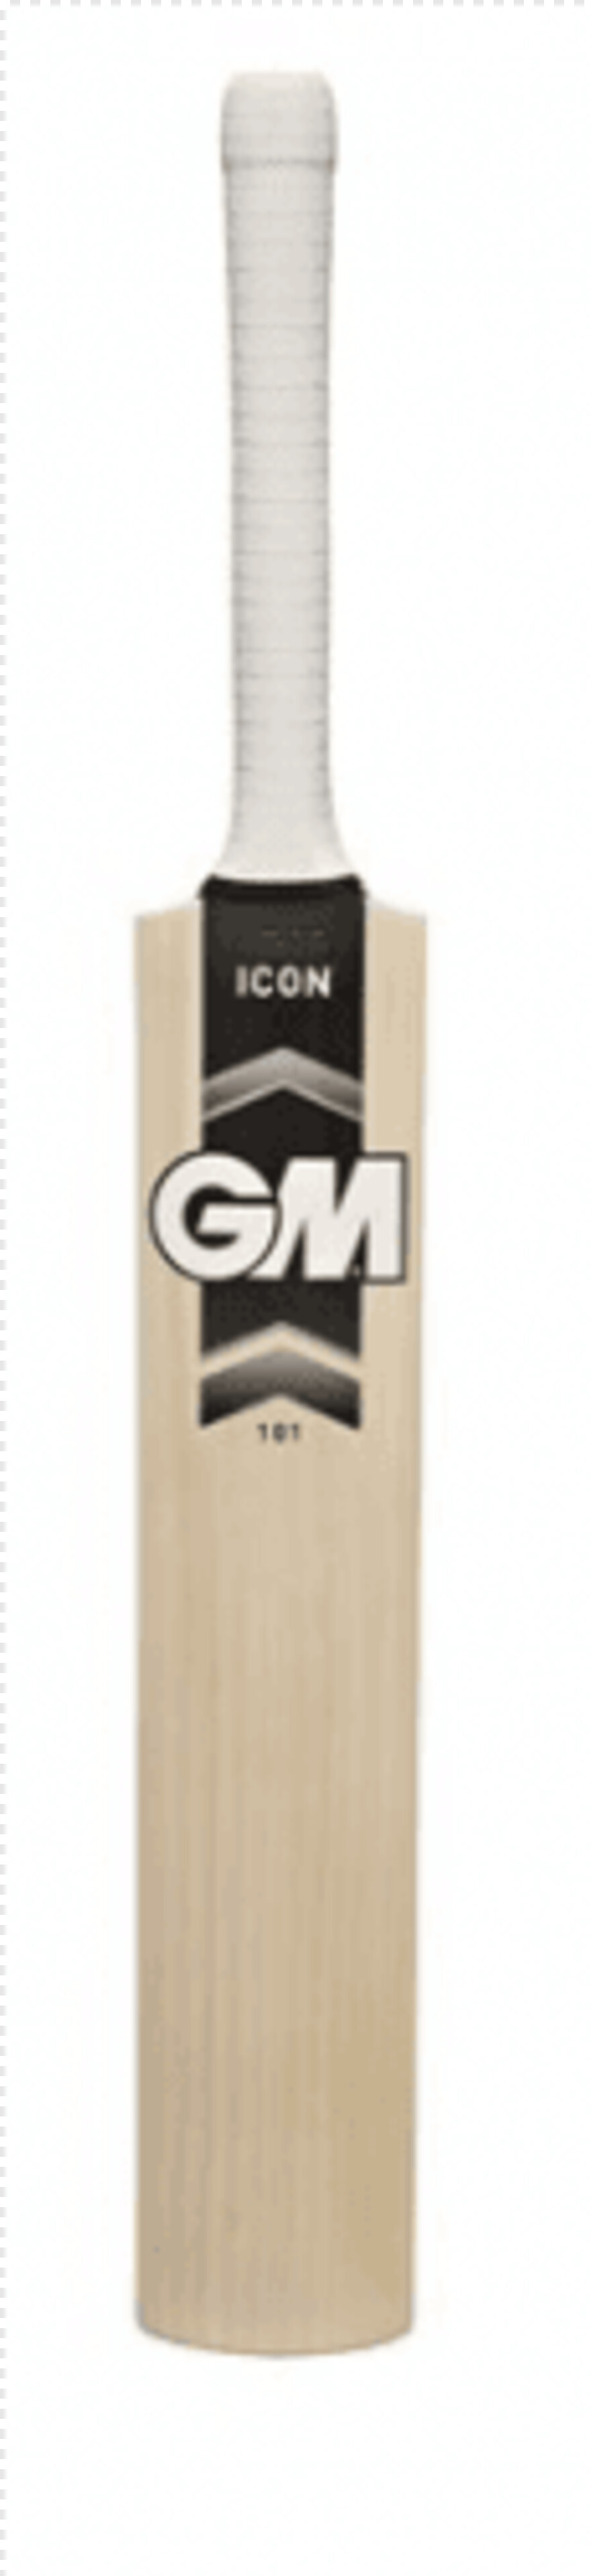  Cricket Vector, Cricket Images, Gm Logo, Cricket Cup, Cricket Clipart, Cricket Bat And Ball